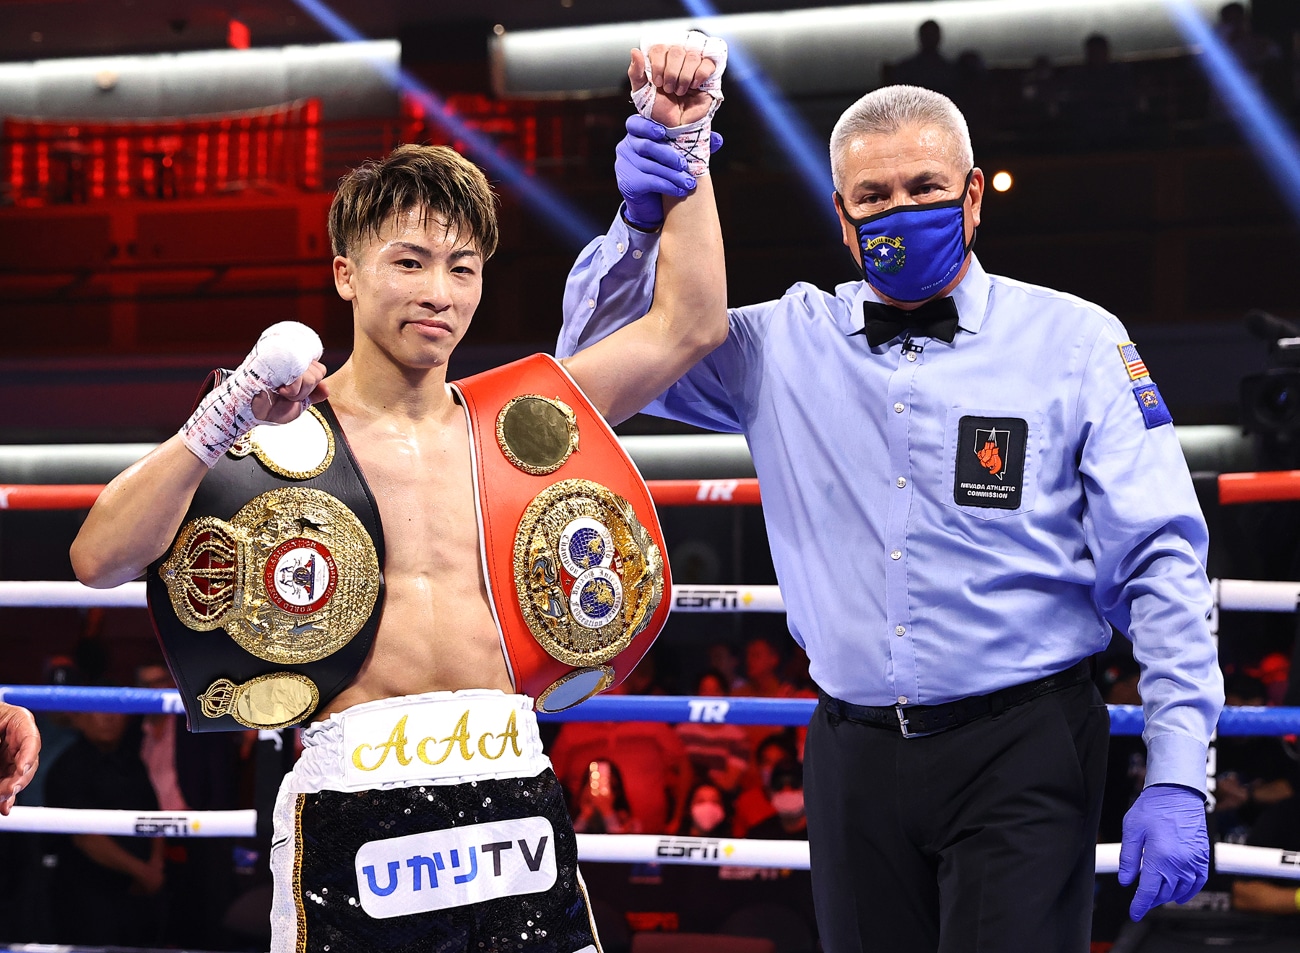 Naoya Inoue boxing photo and news image